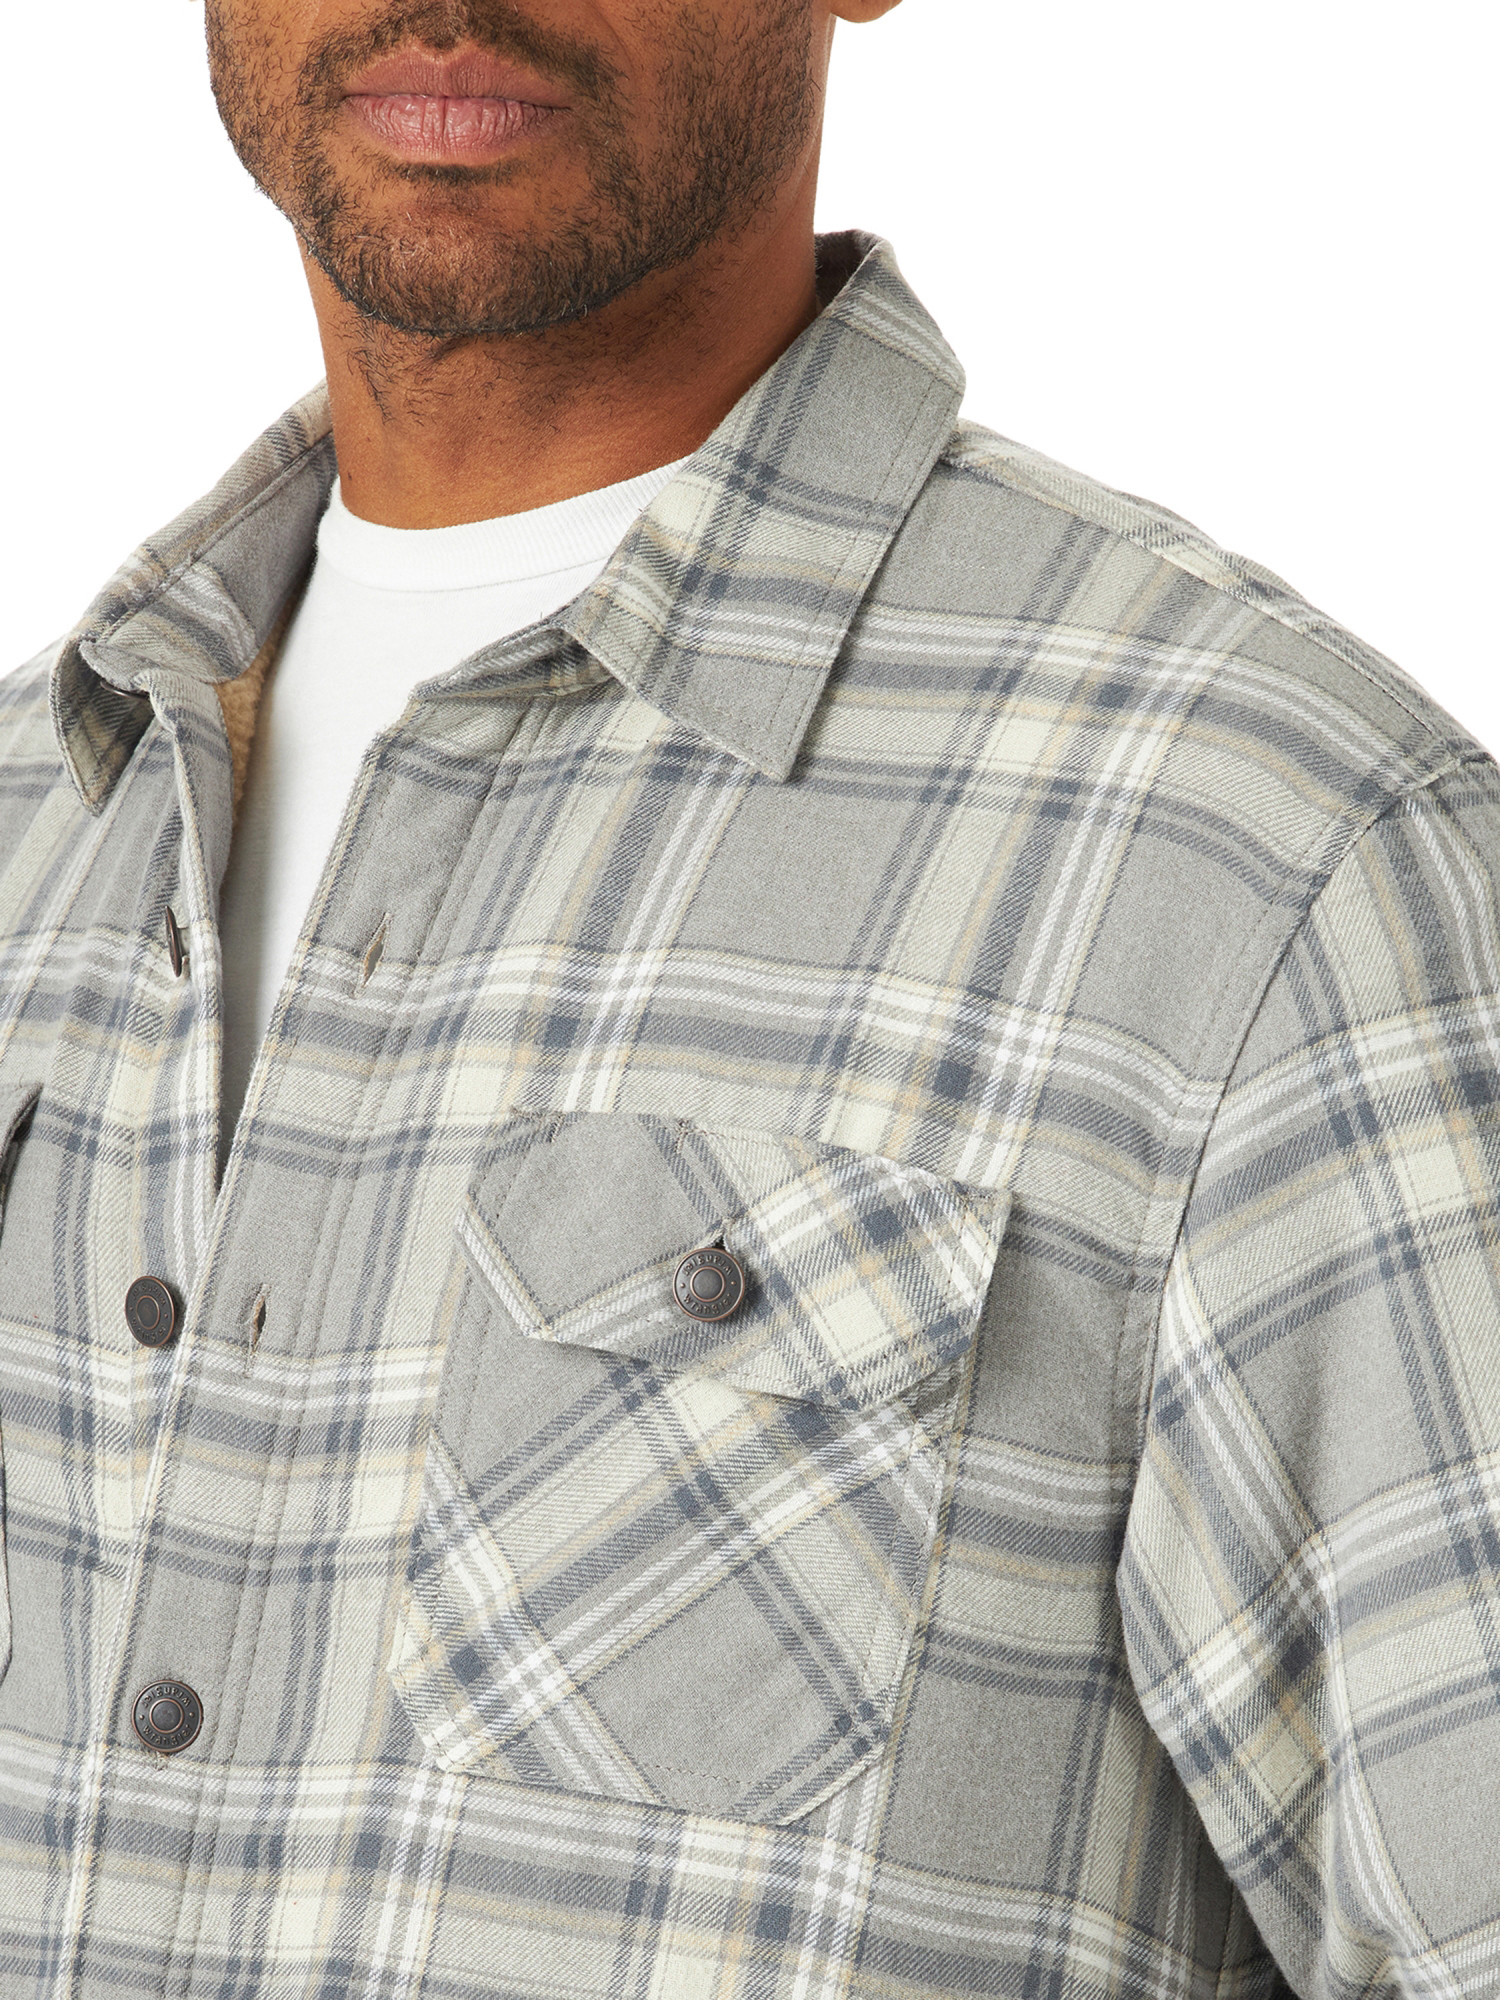 Wrangler Men's Heavyweight Sherpa-Lined Shirt Jacket - image 3 of 5